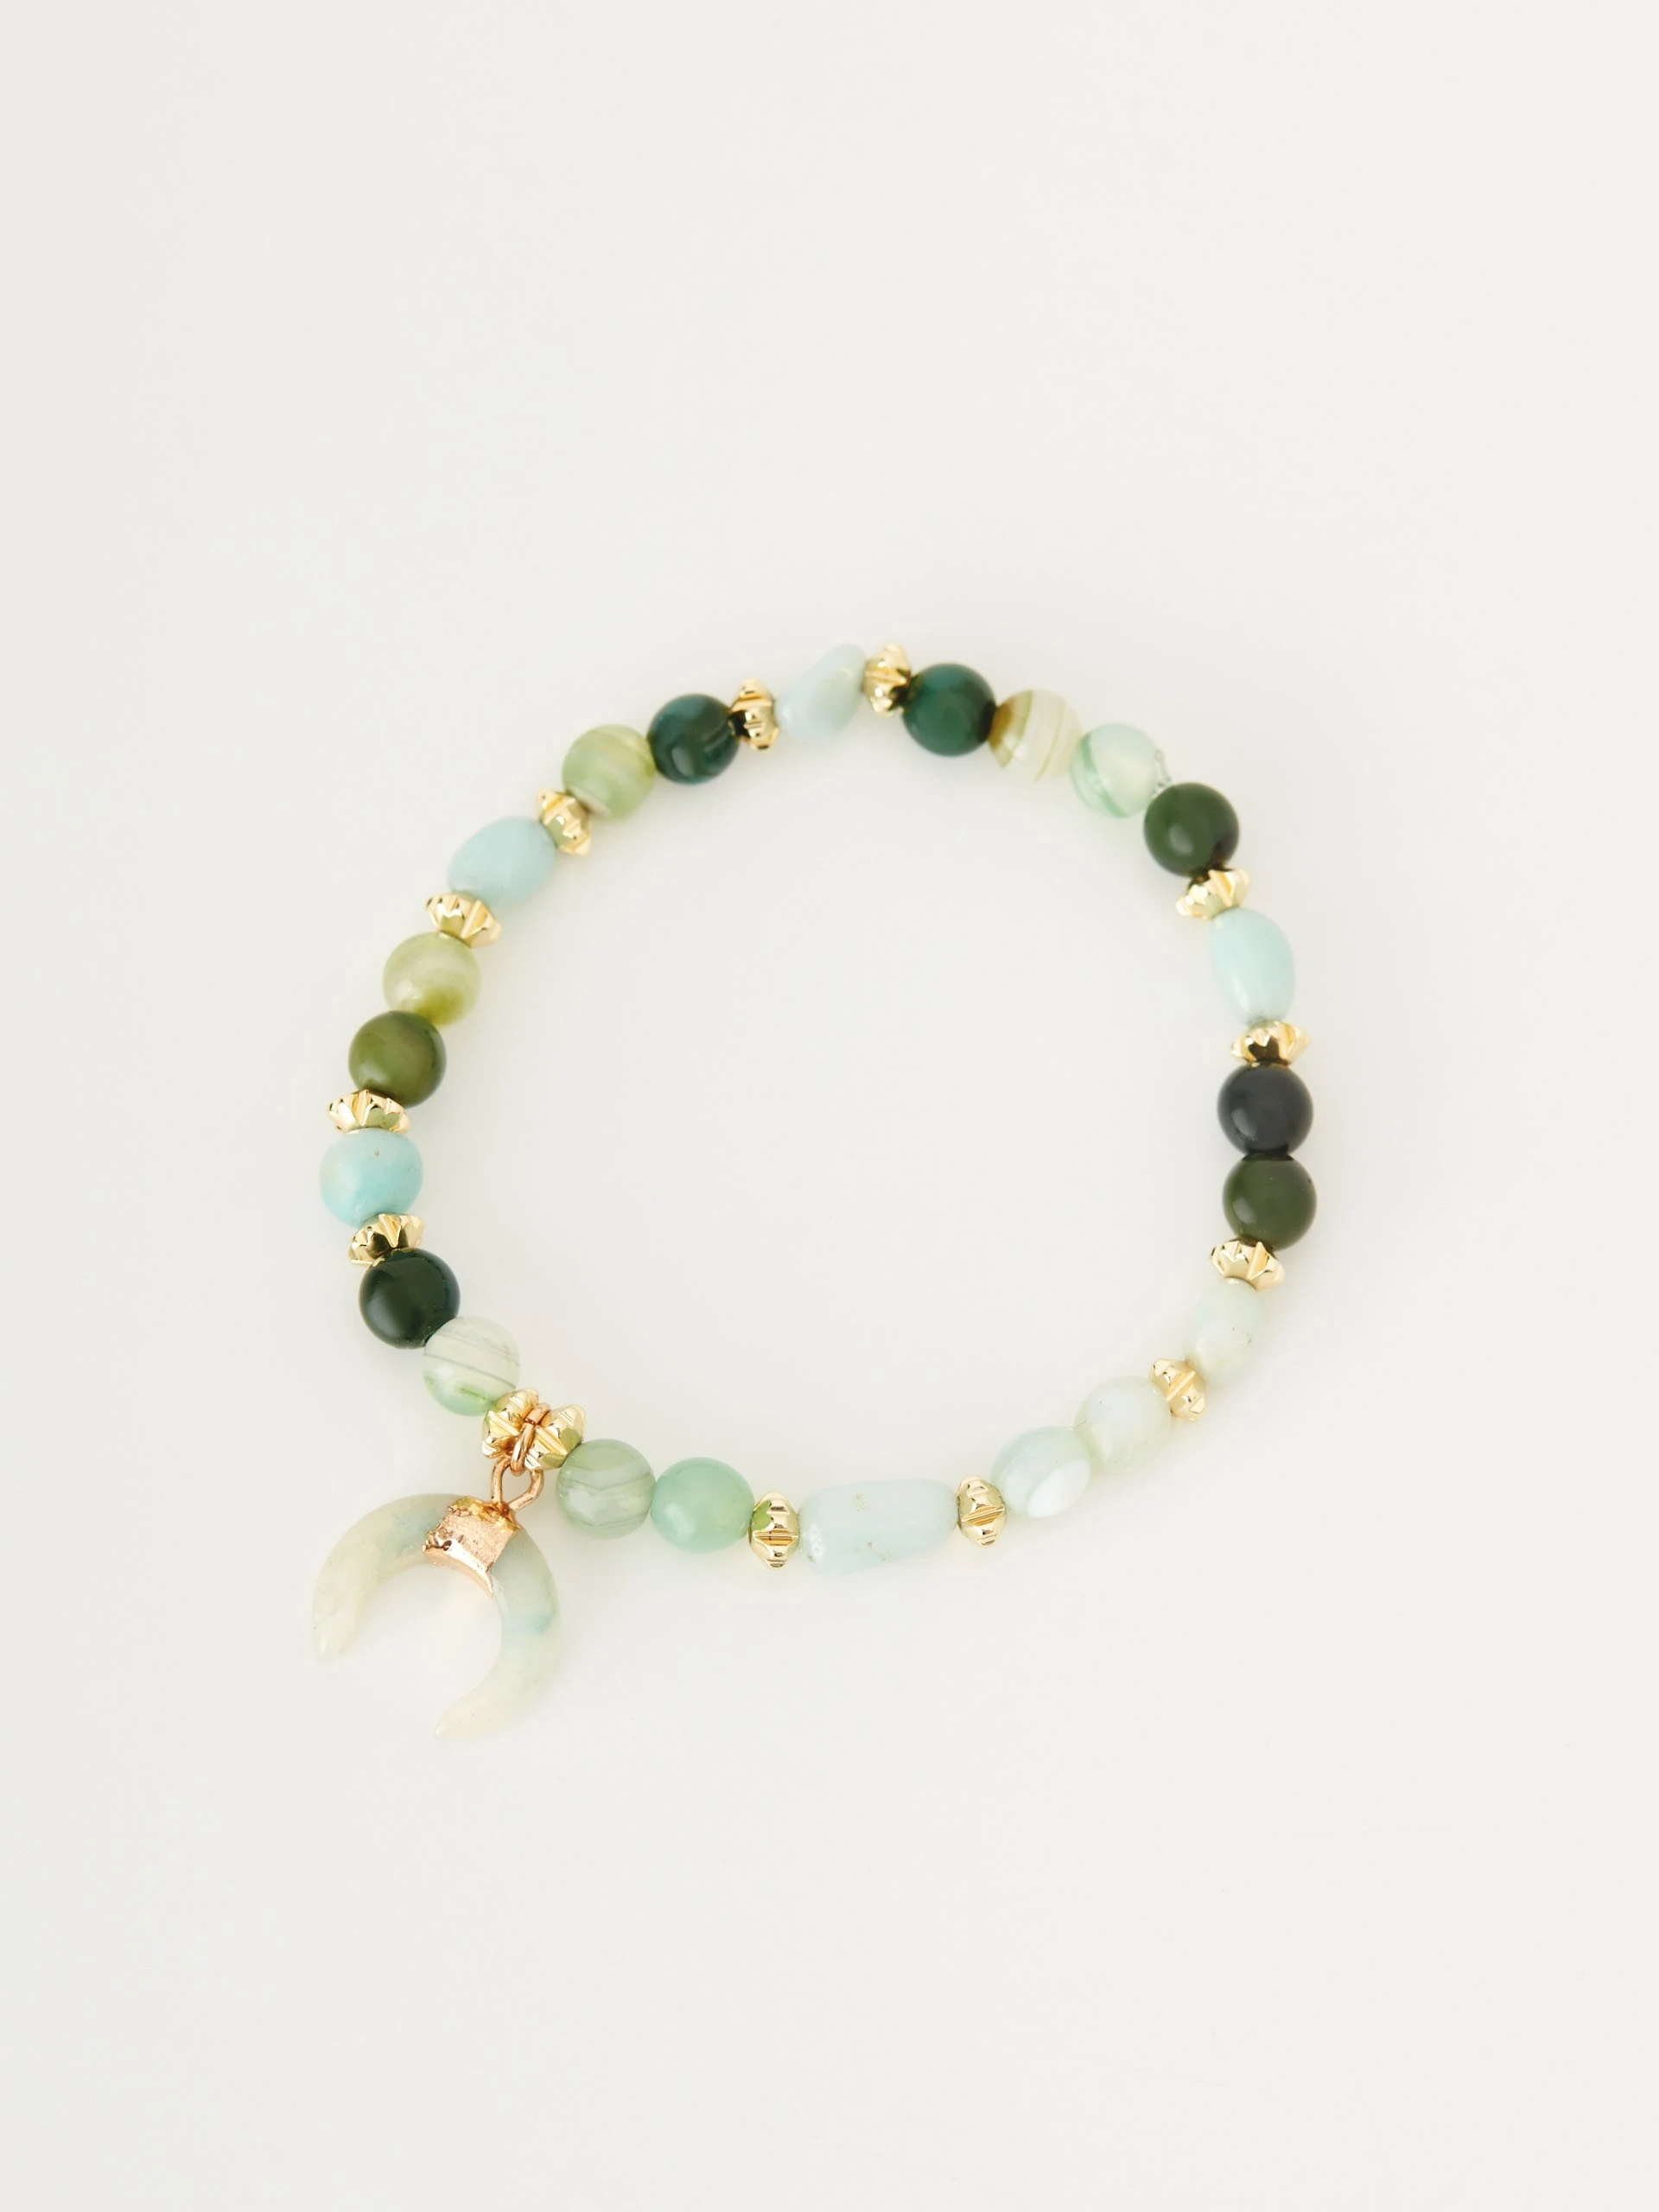 Bracelet in shades of green